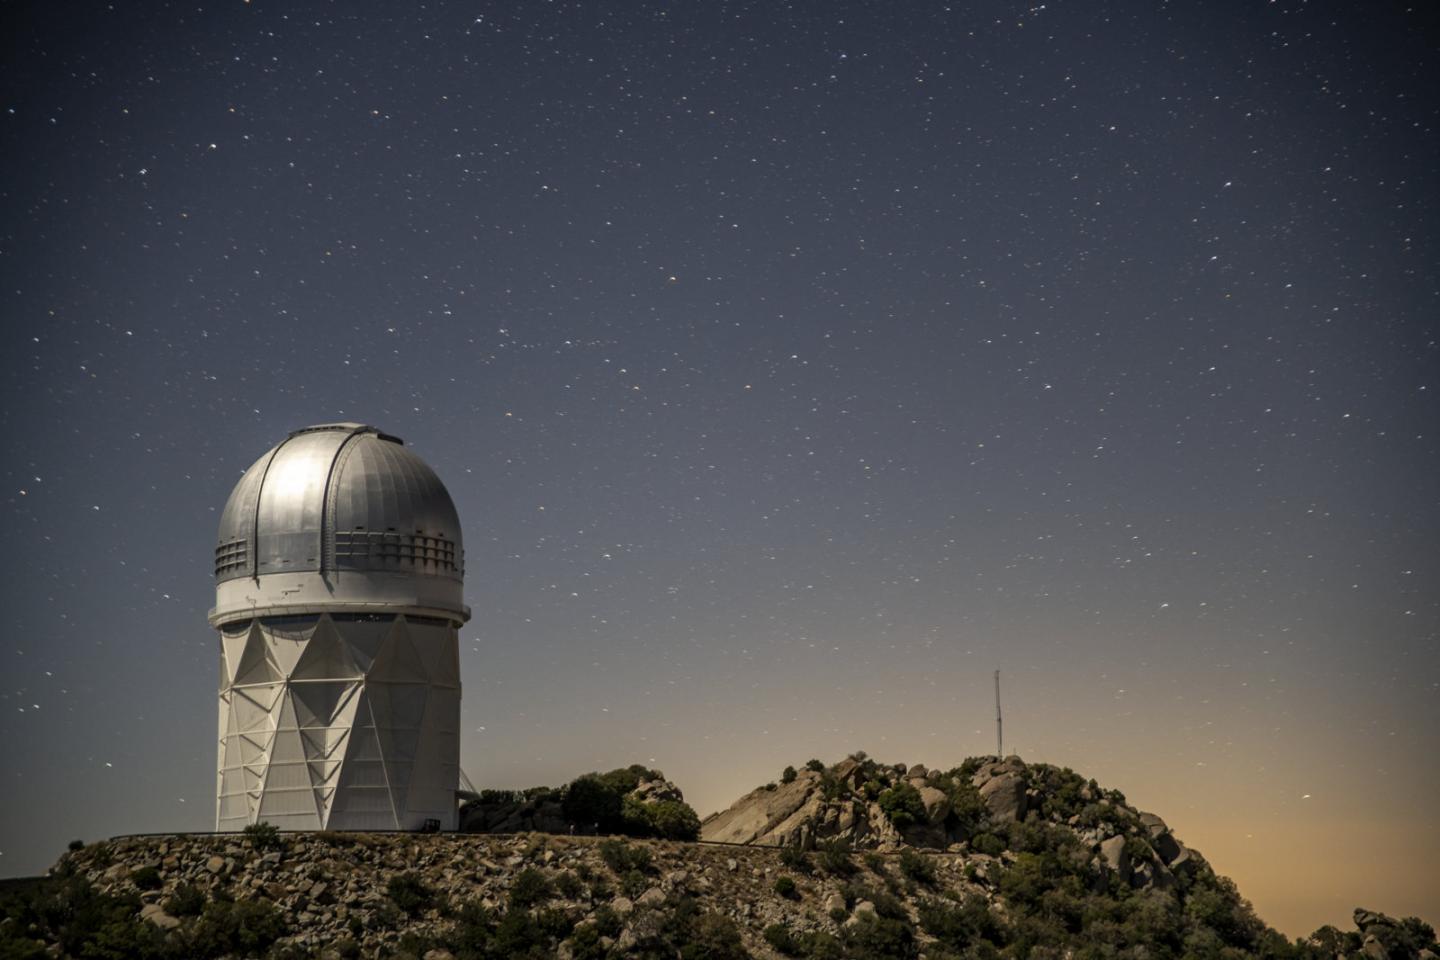 The Mayall Telescope at Kitt Peak National Observatory near Tucson, Arizona